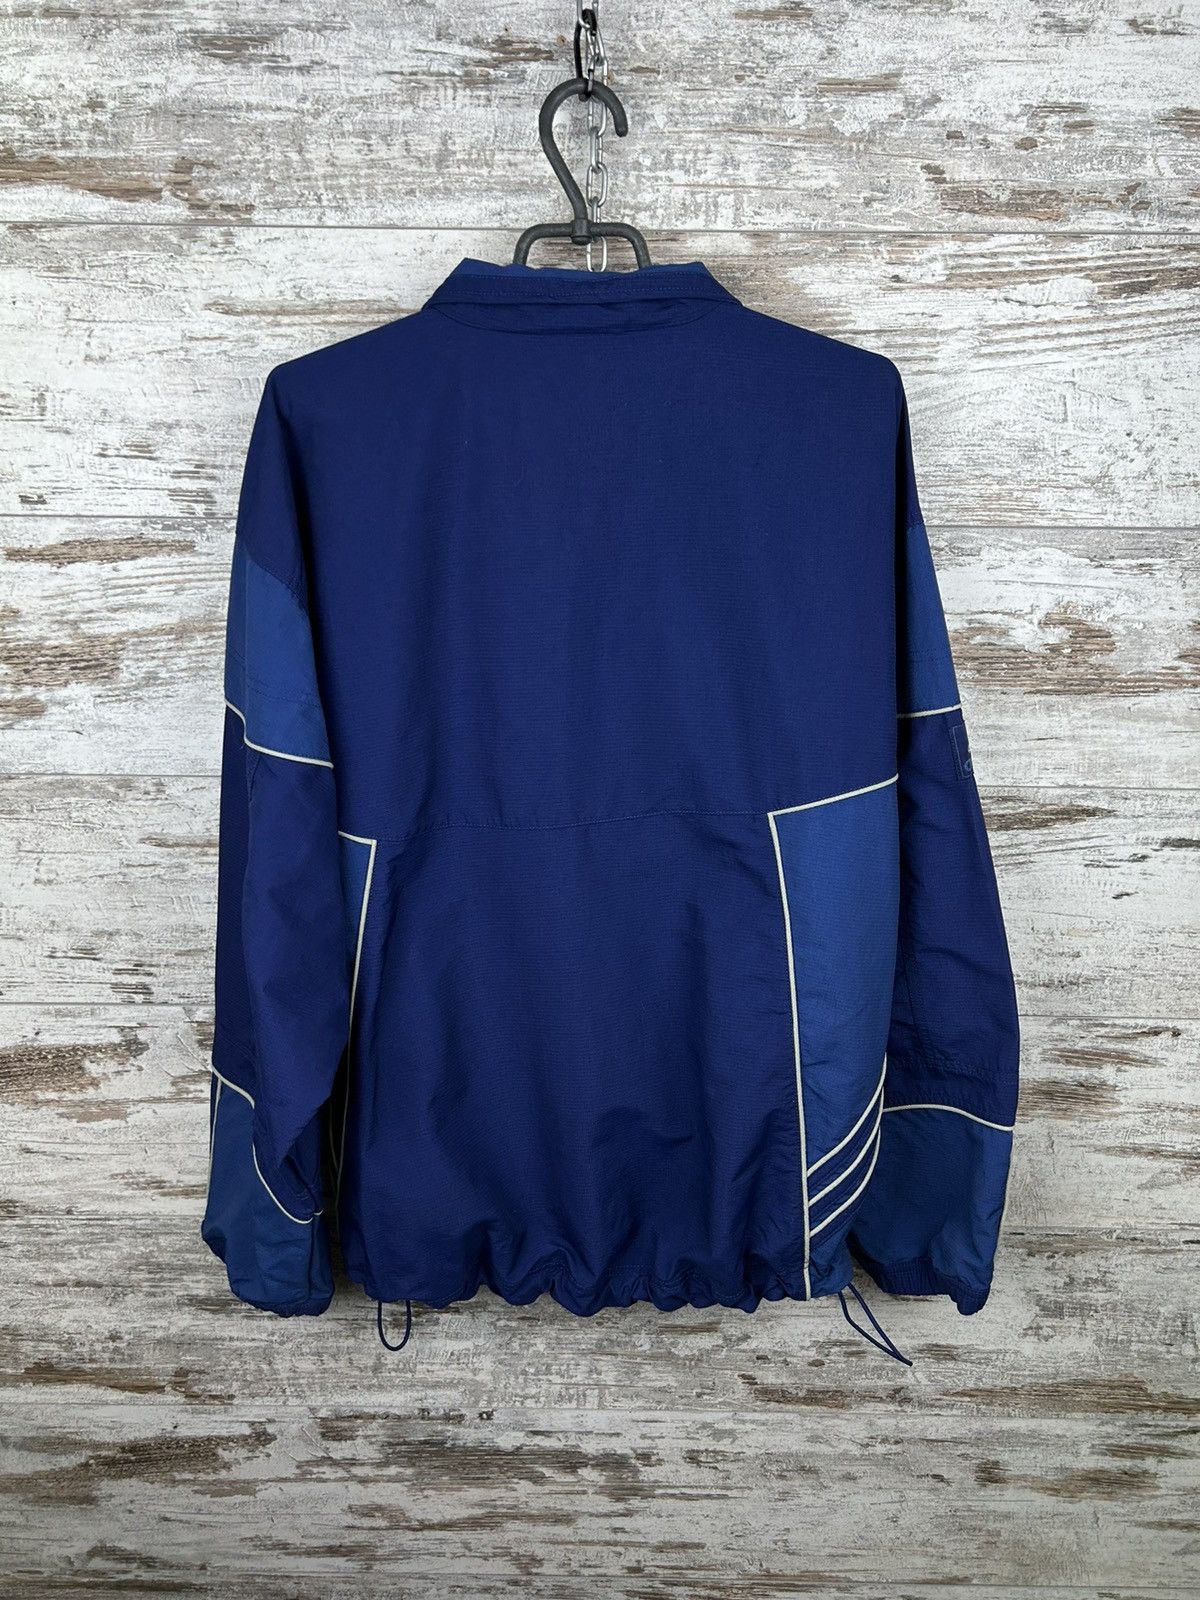 Adidas Mens Vintage Adidas Stripes Olympic track jacket y2k rare Size US M / EU 48-50 / 2 - 16 Preview